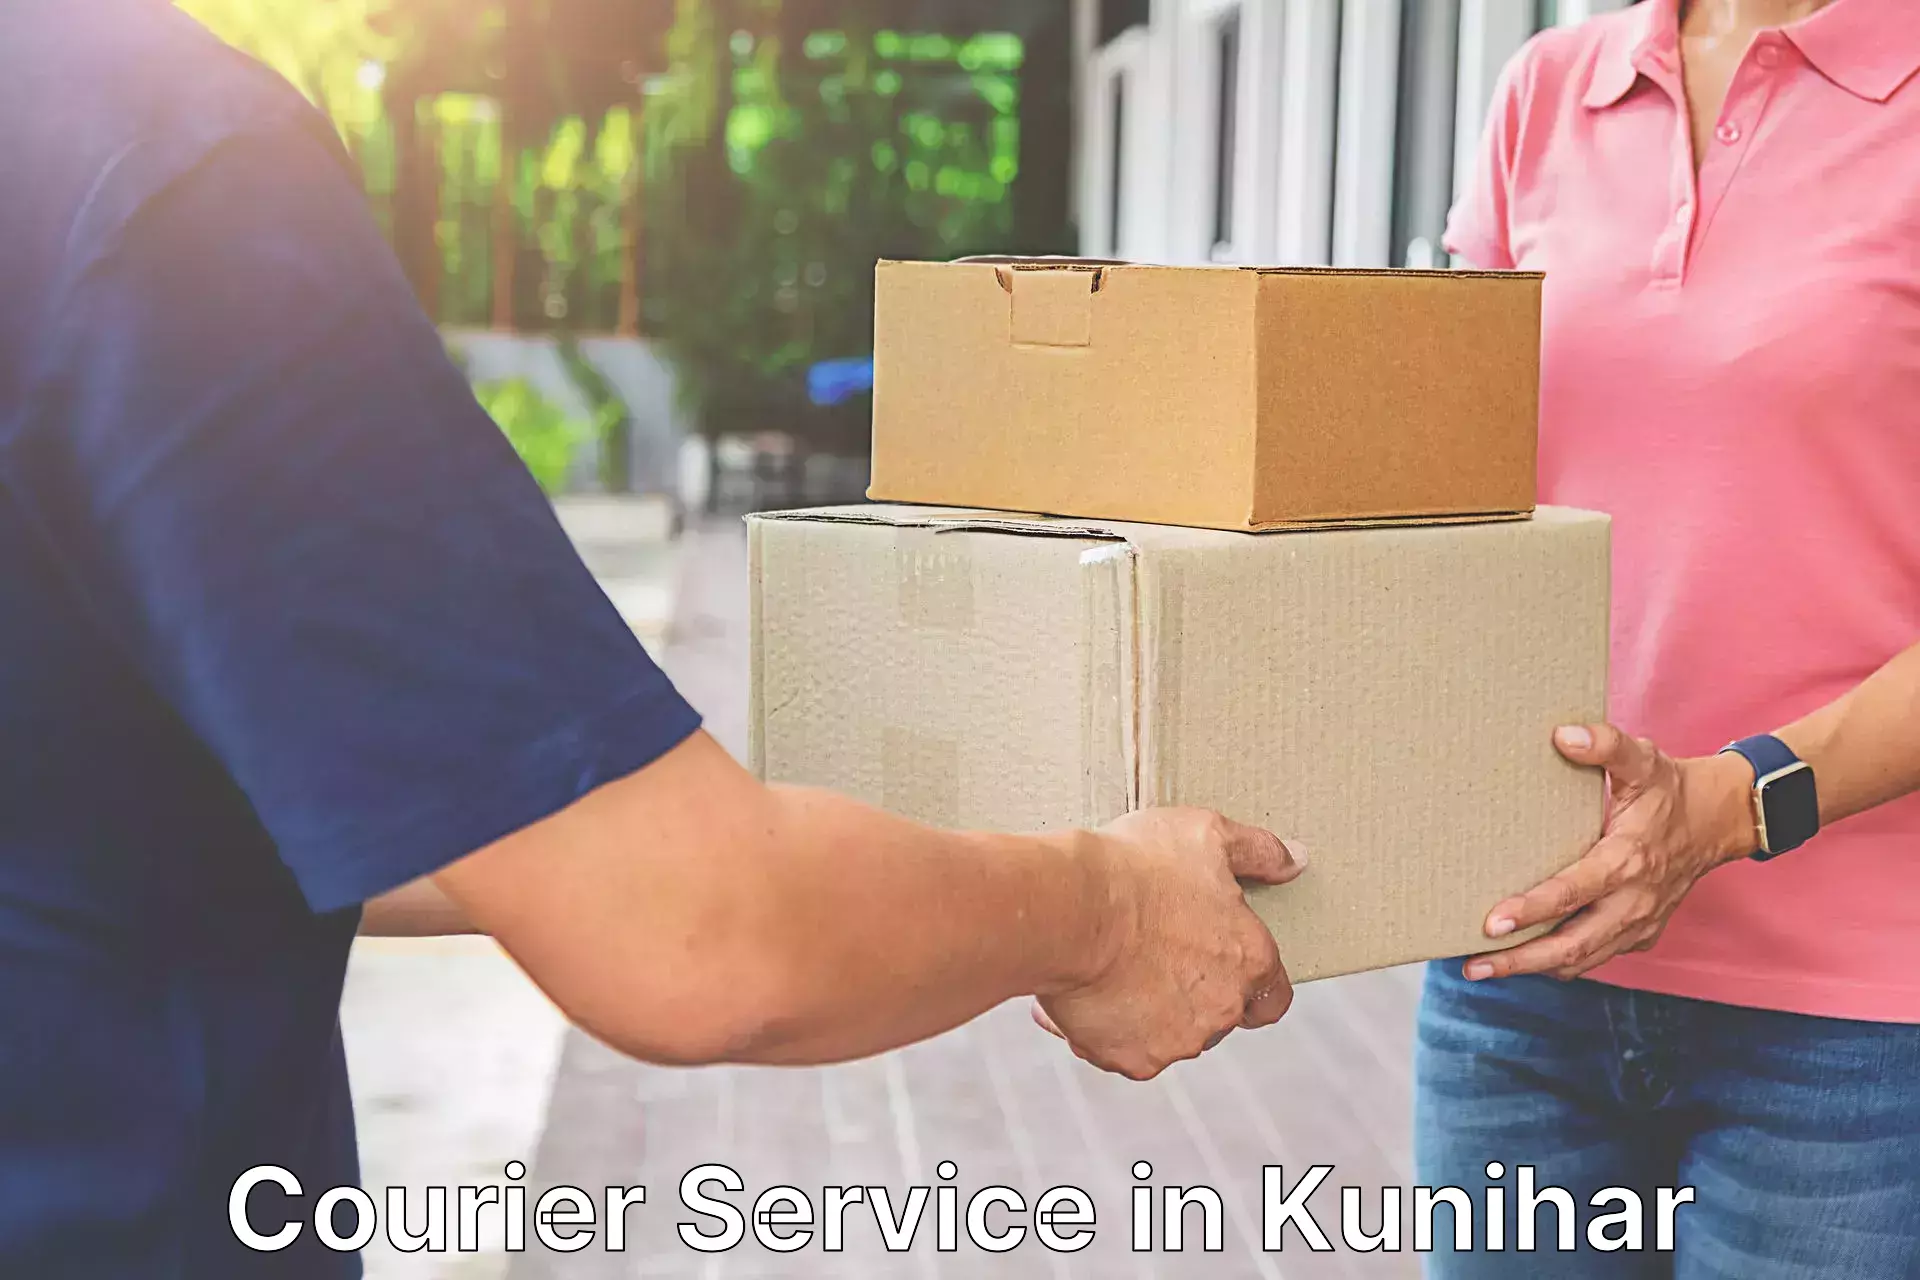 Efficient freight service in Kunihar